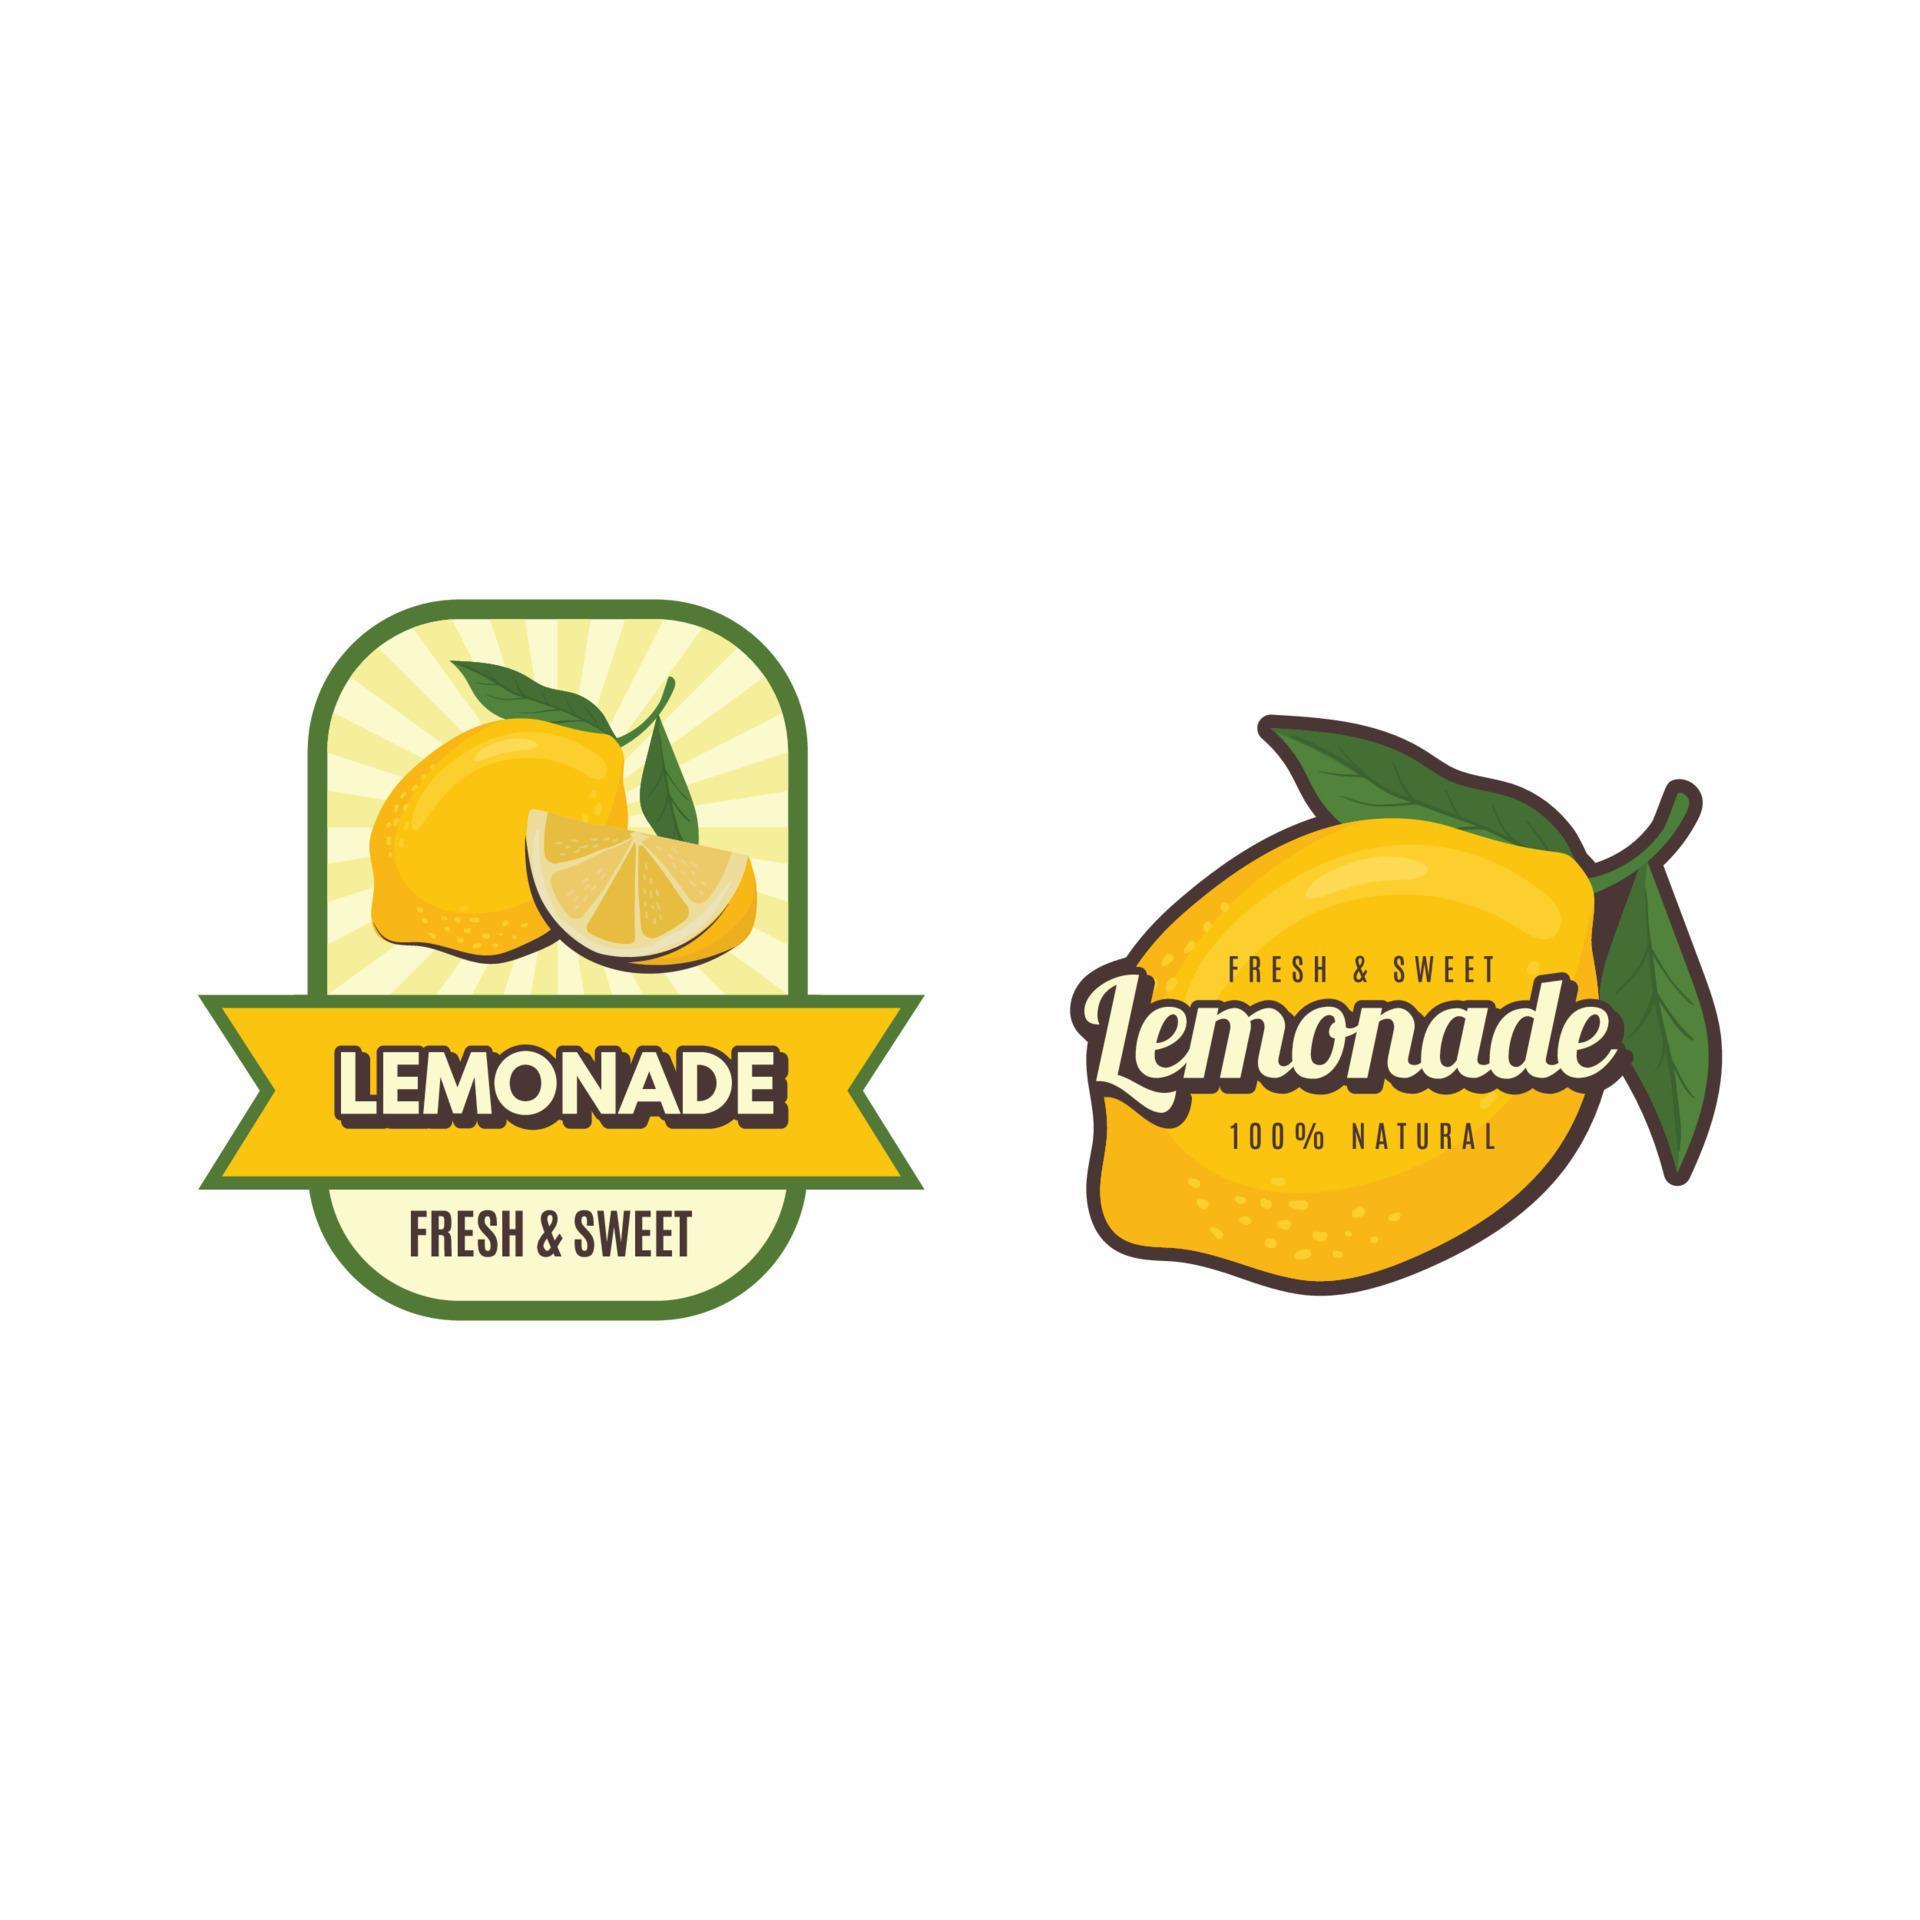 Lemonade badges retro labels with lemon illustrations design emblem ...